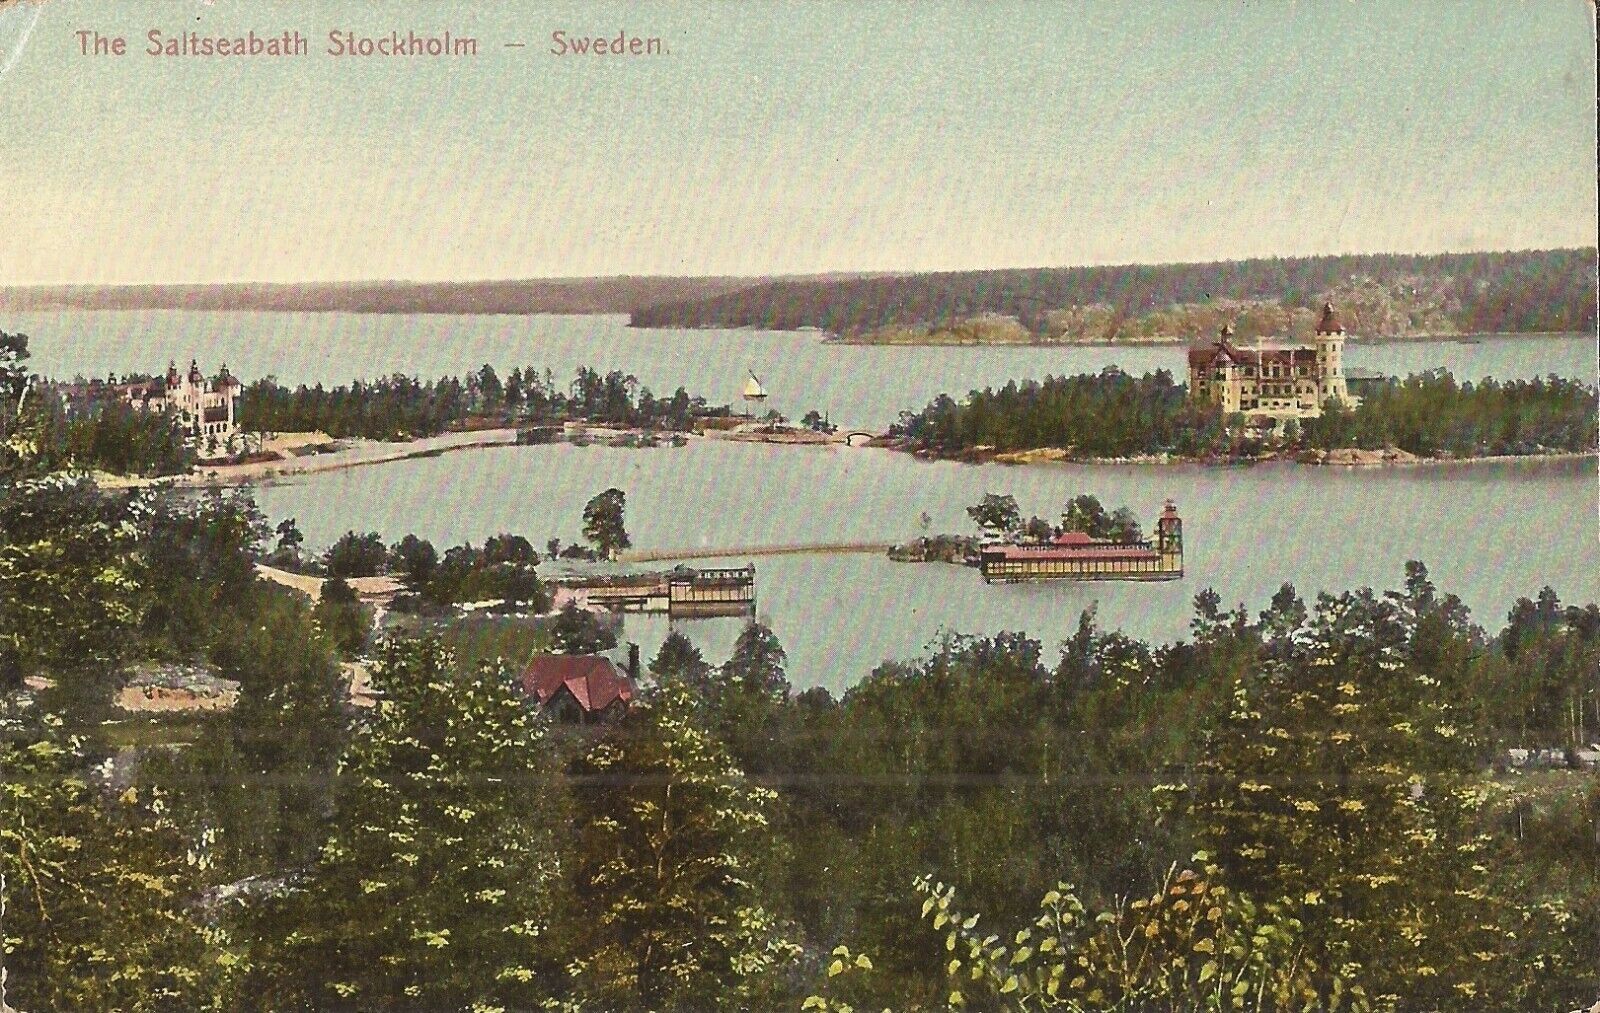 Stockholm, SWEDEN - Saltsjobaden - Saltseabath